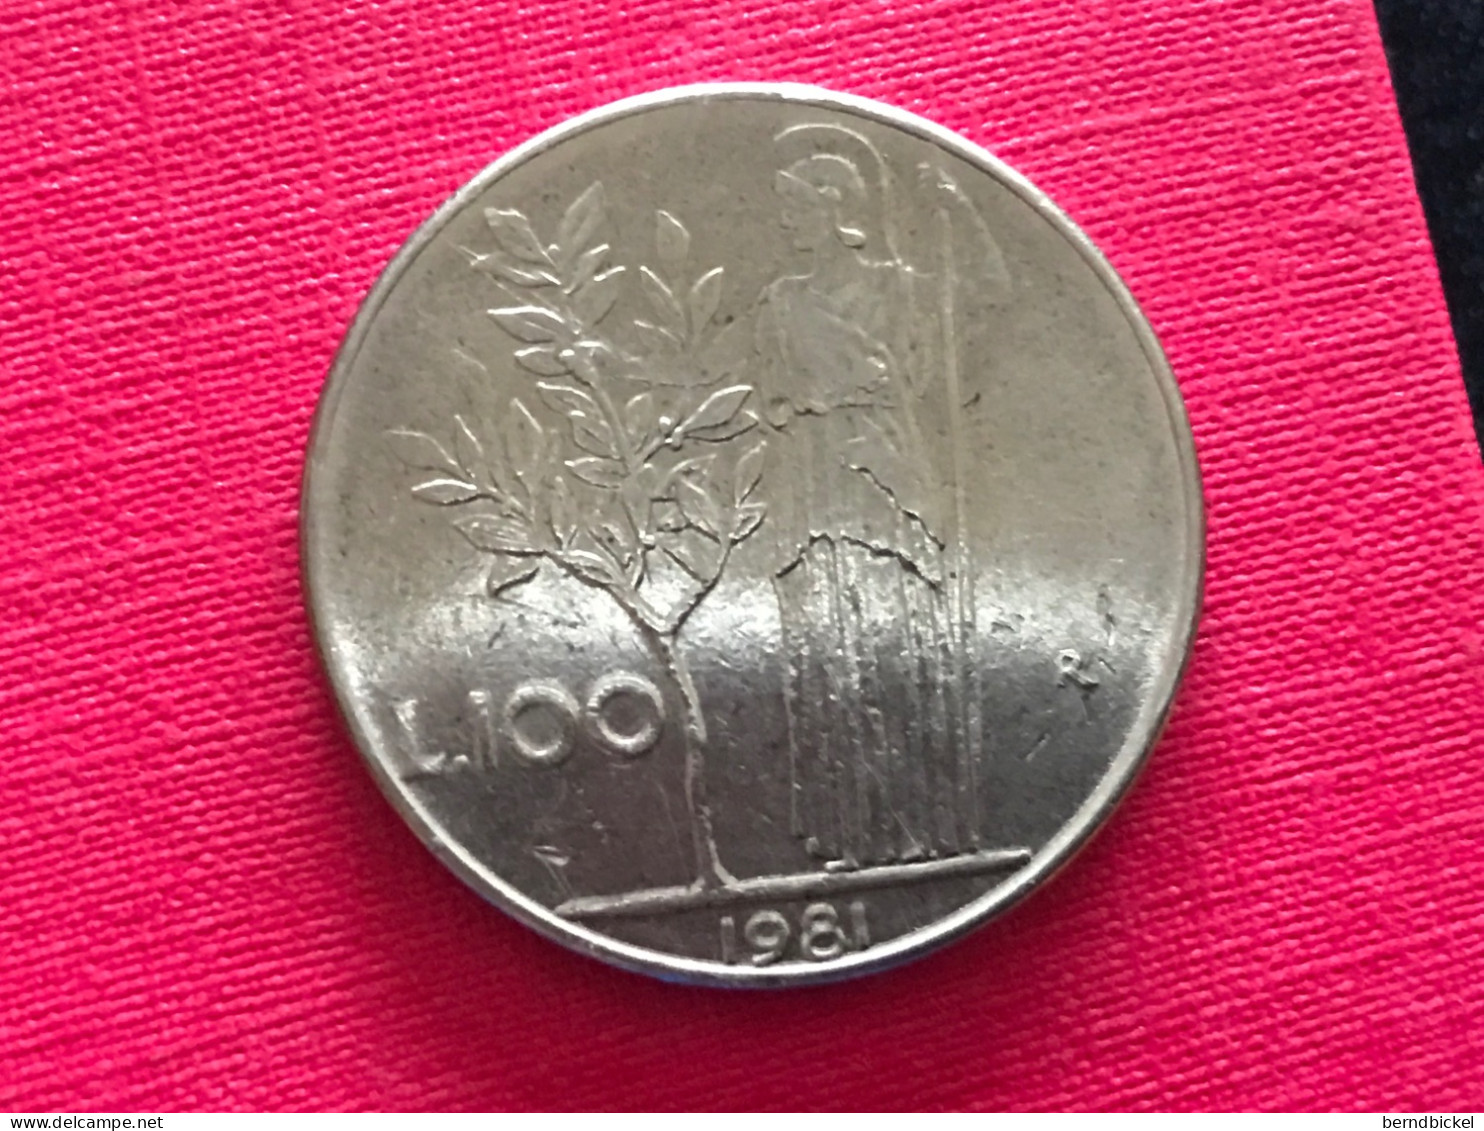 Münze Münzen Umlaufmünze Italien 100 Lire 1981 - 100 Lire